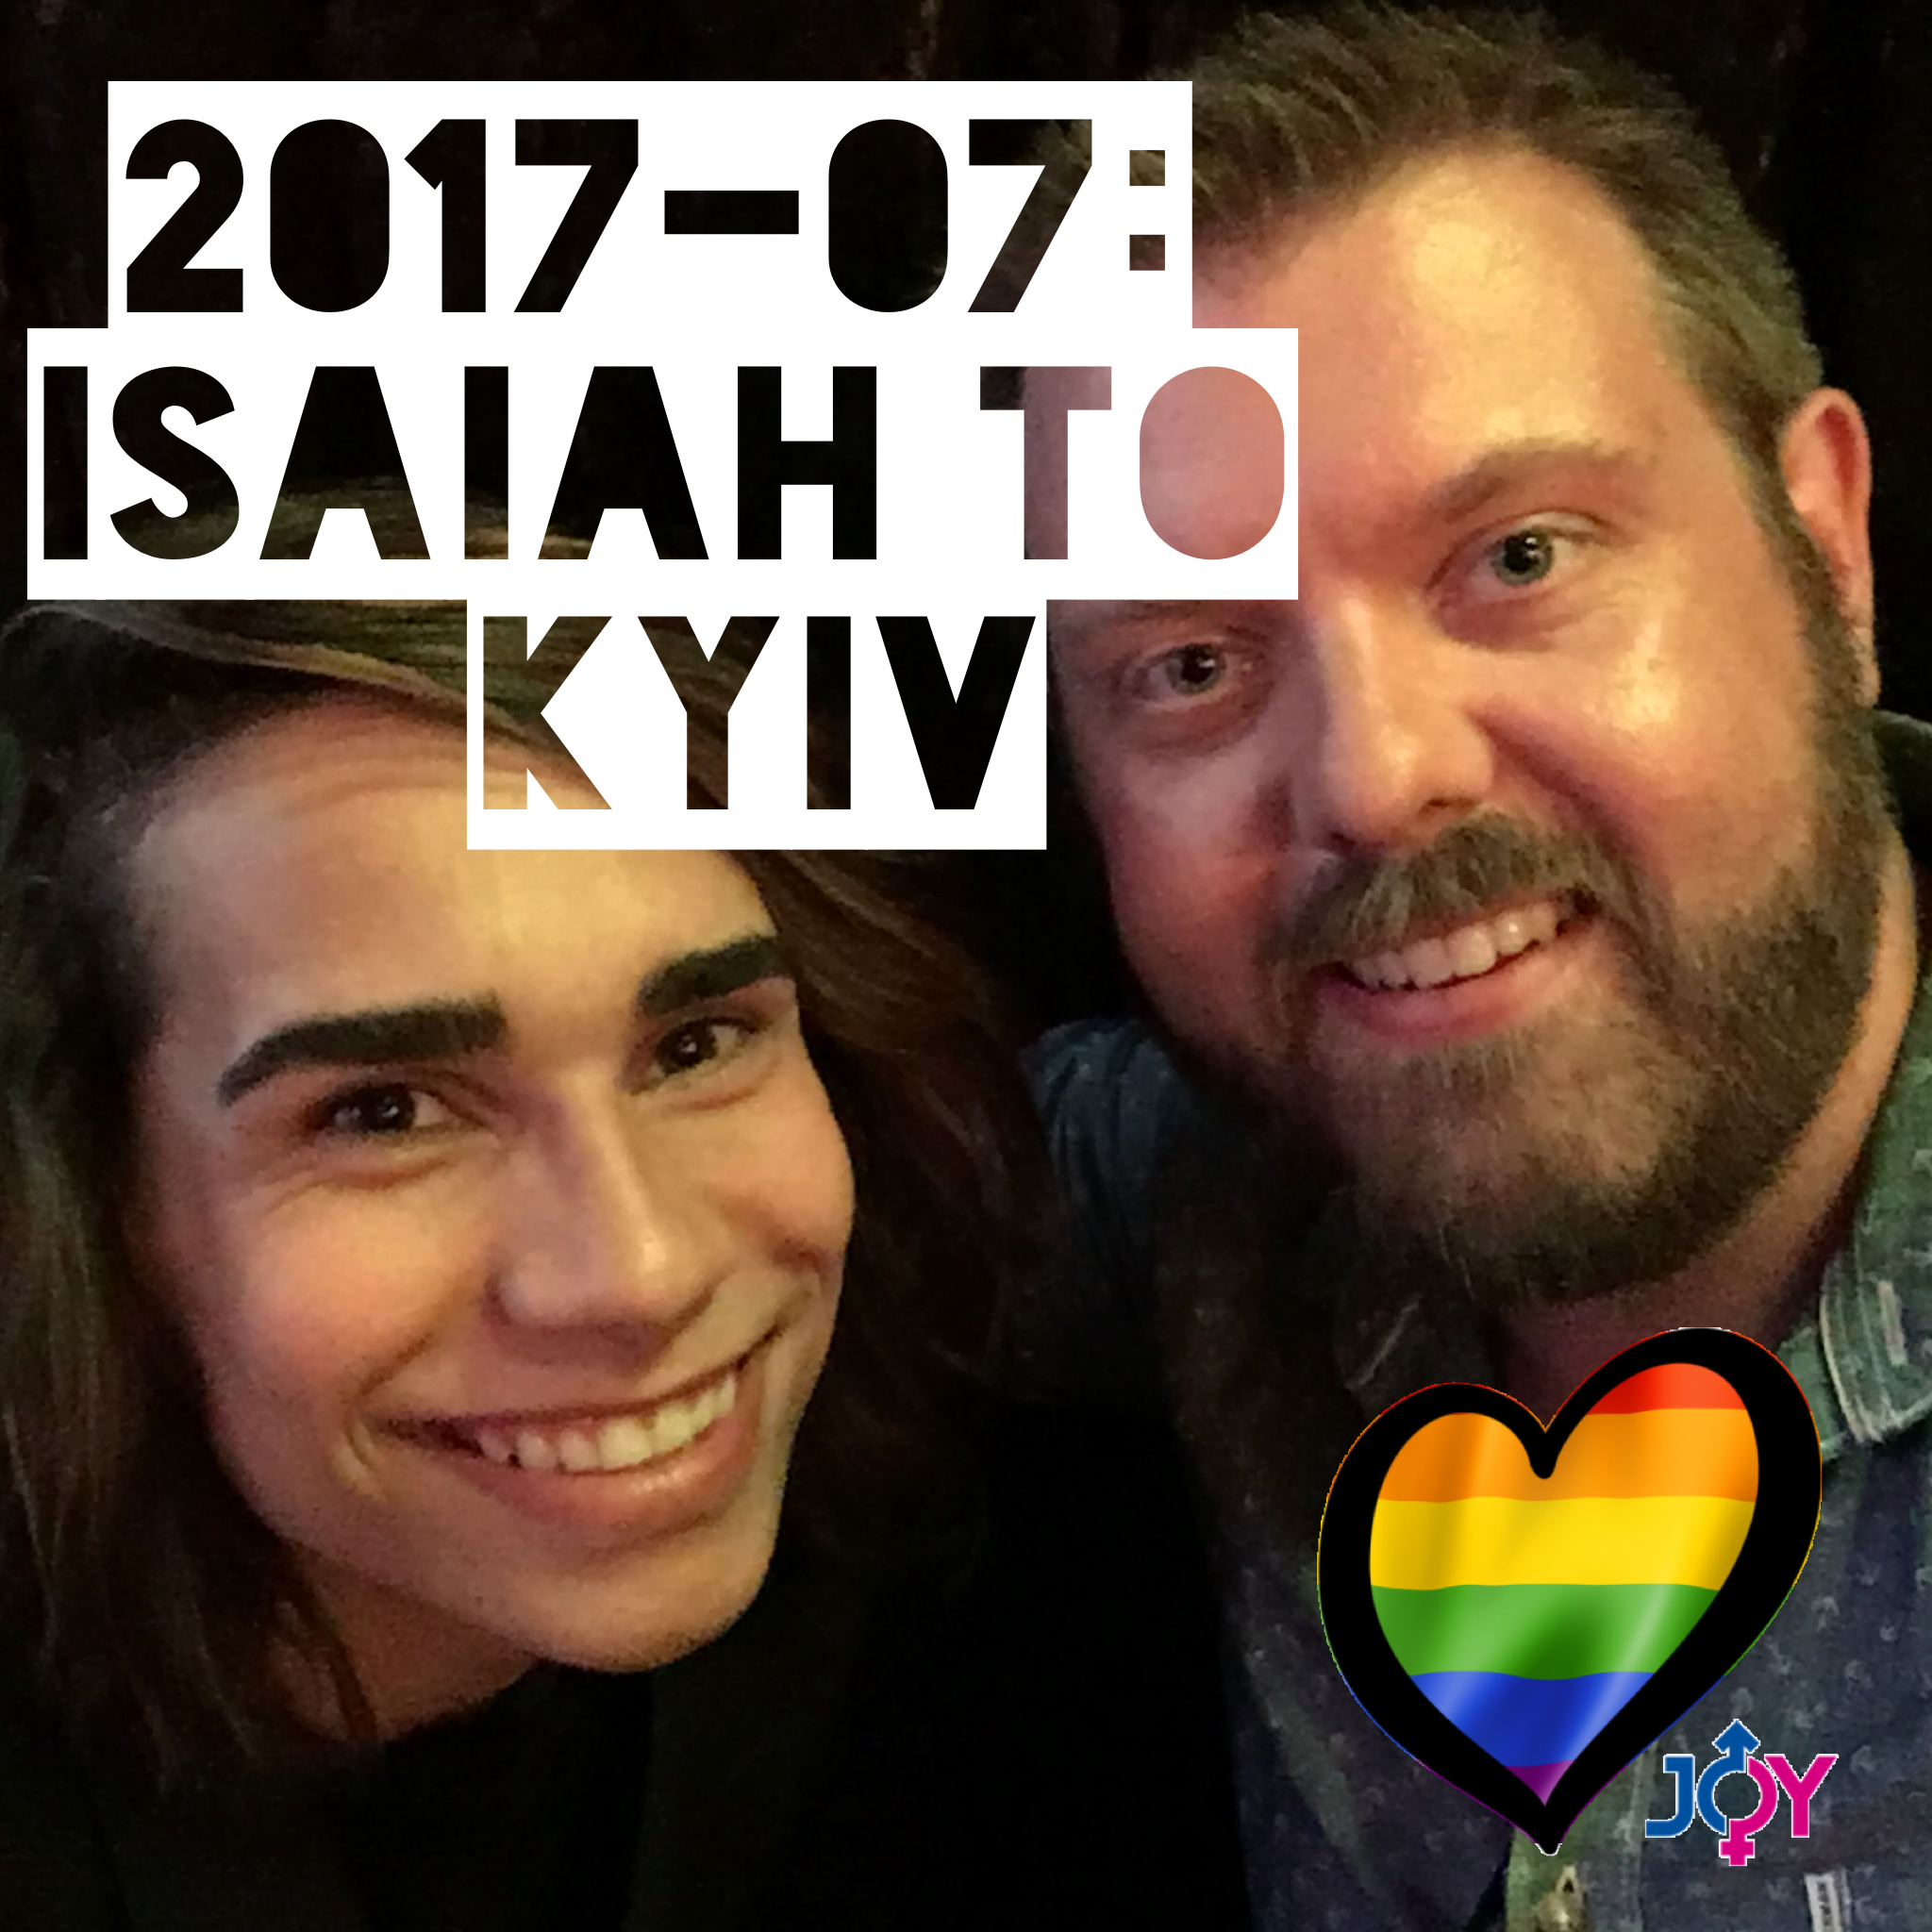 2017-07: Isaiah to Kyiv